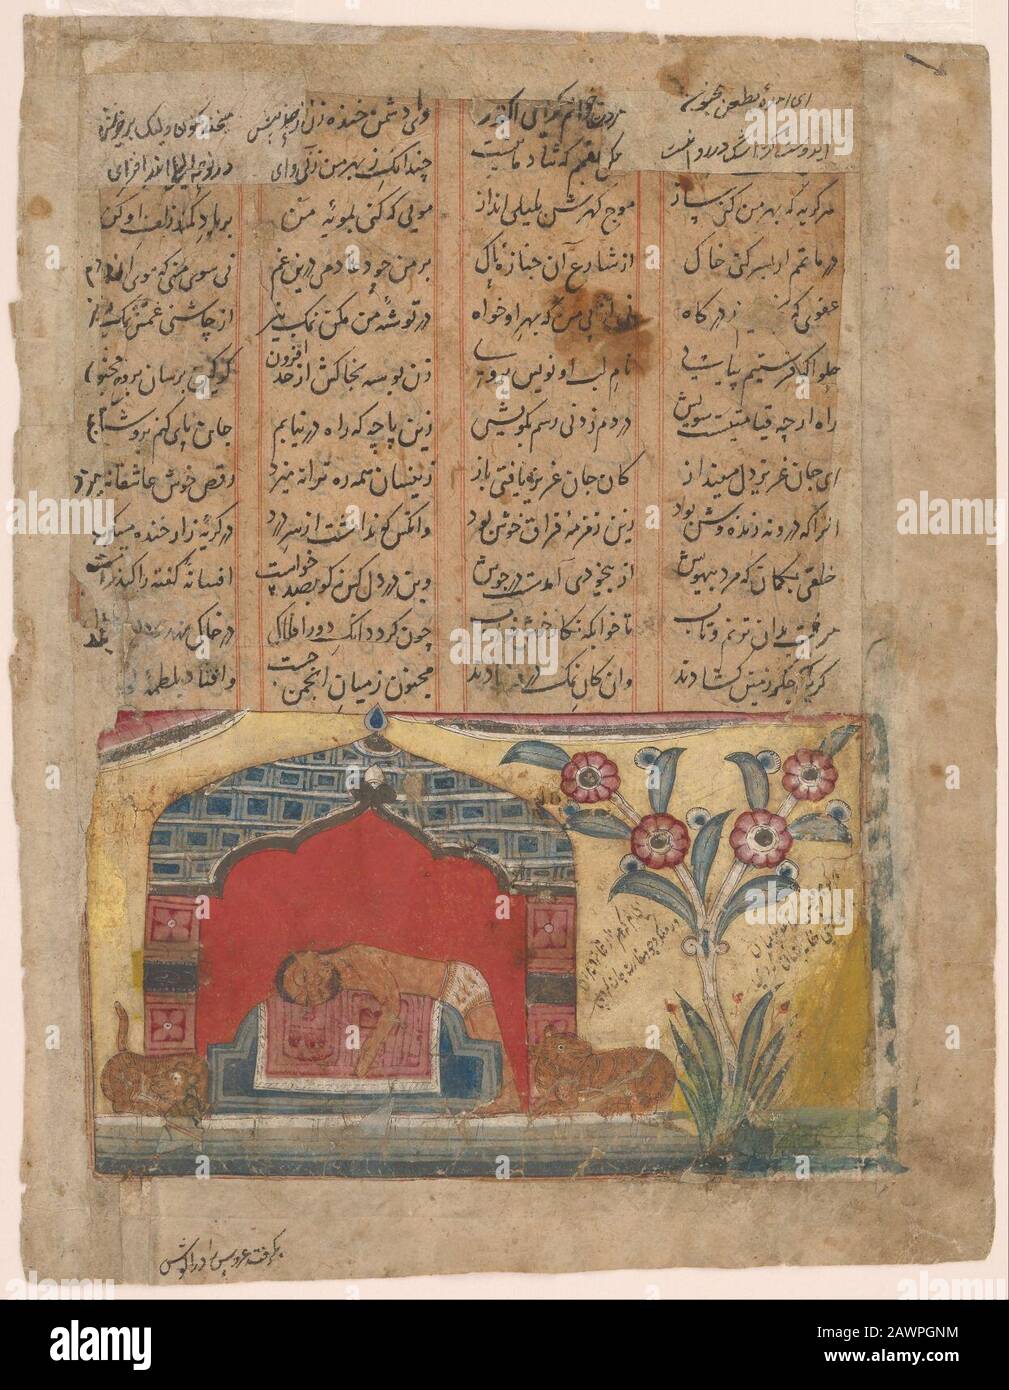 Folio from a Khamsa (Quintet) of Amir Khusraw Dihlavi; Majnun throwing himself onto Layla's grave Stock Photo